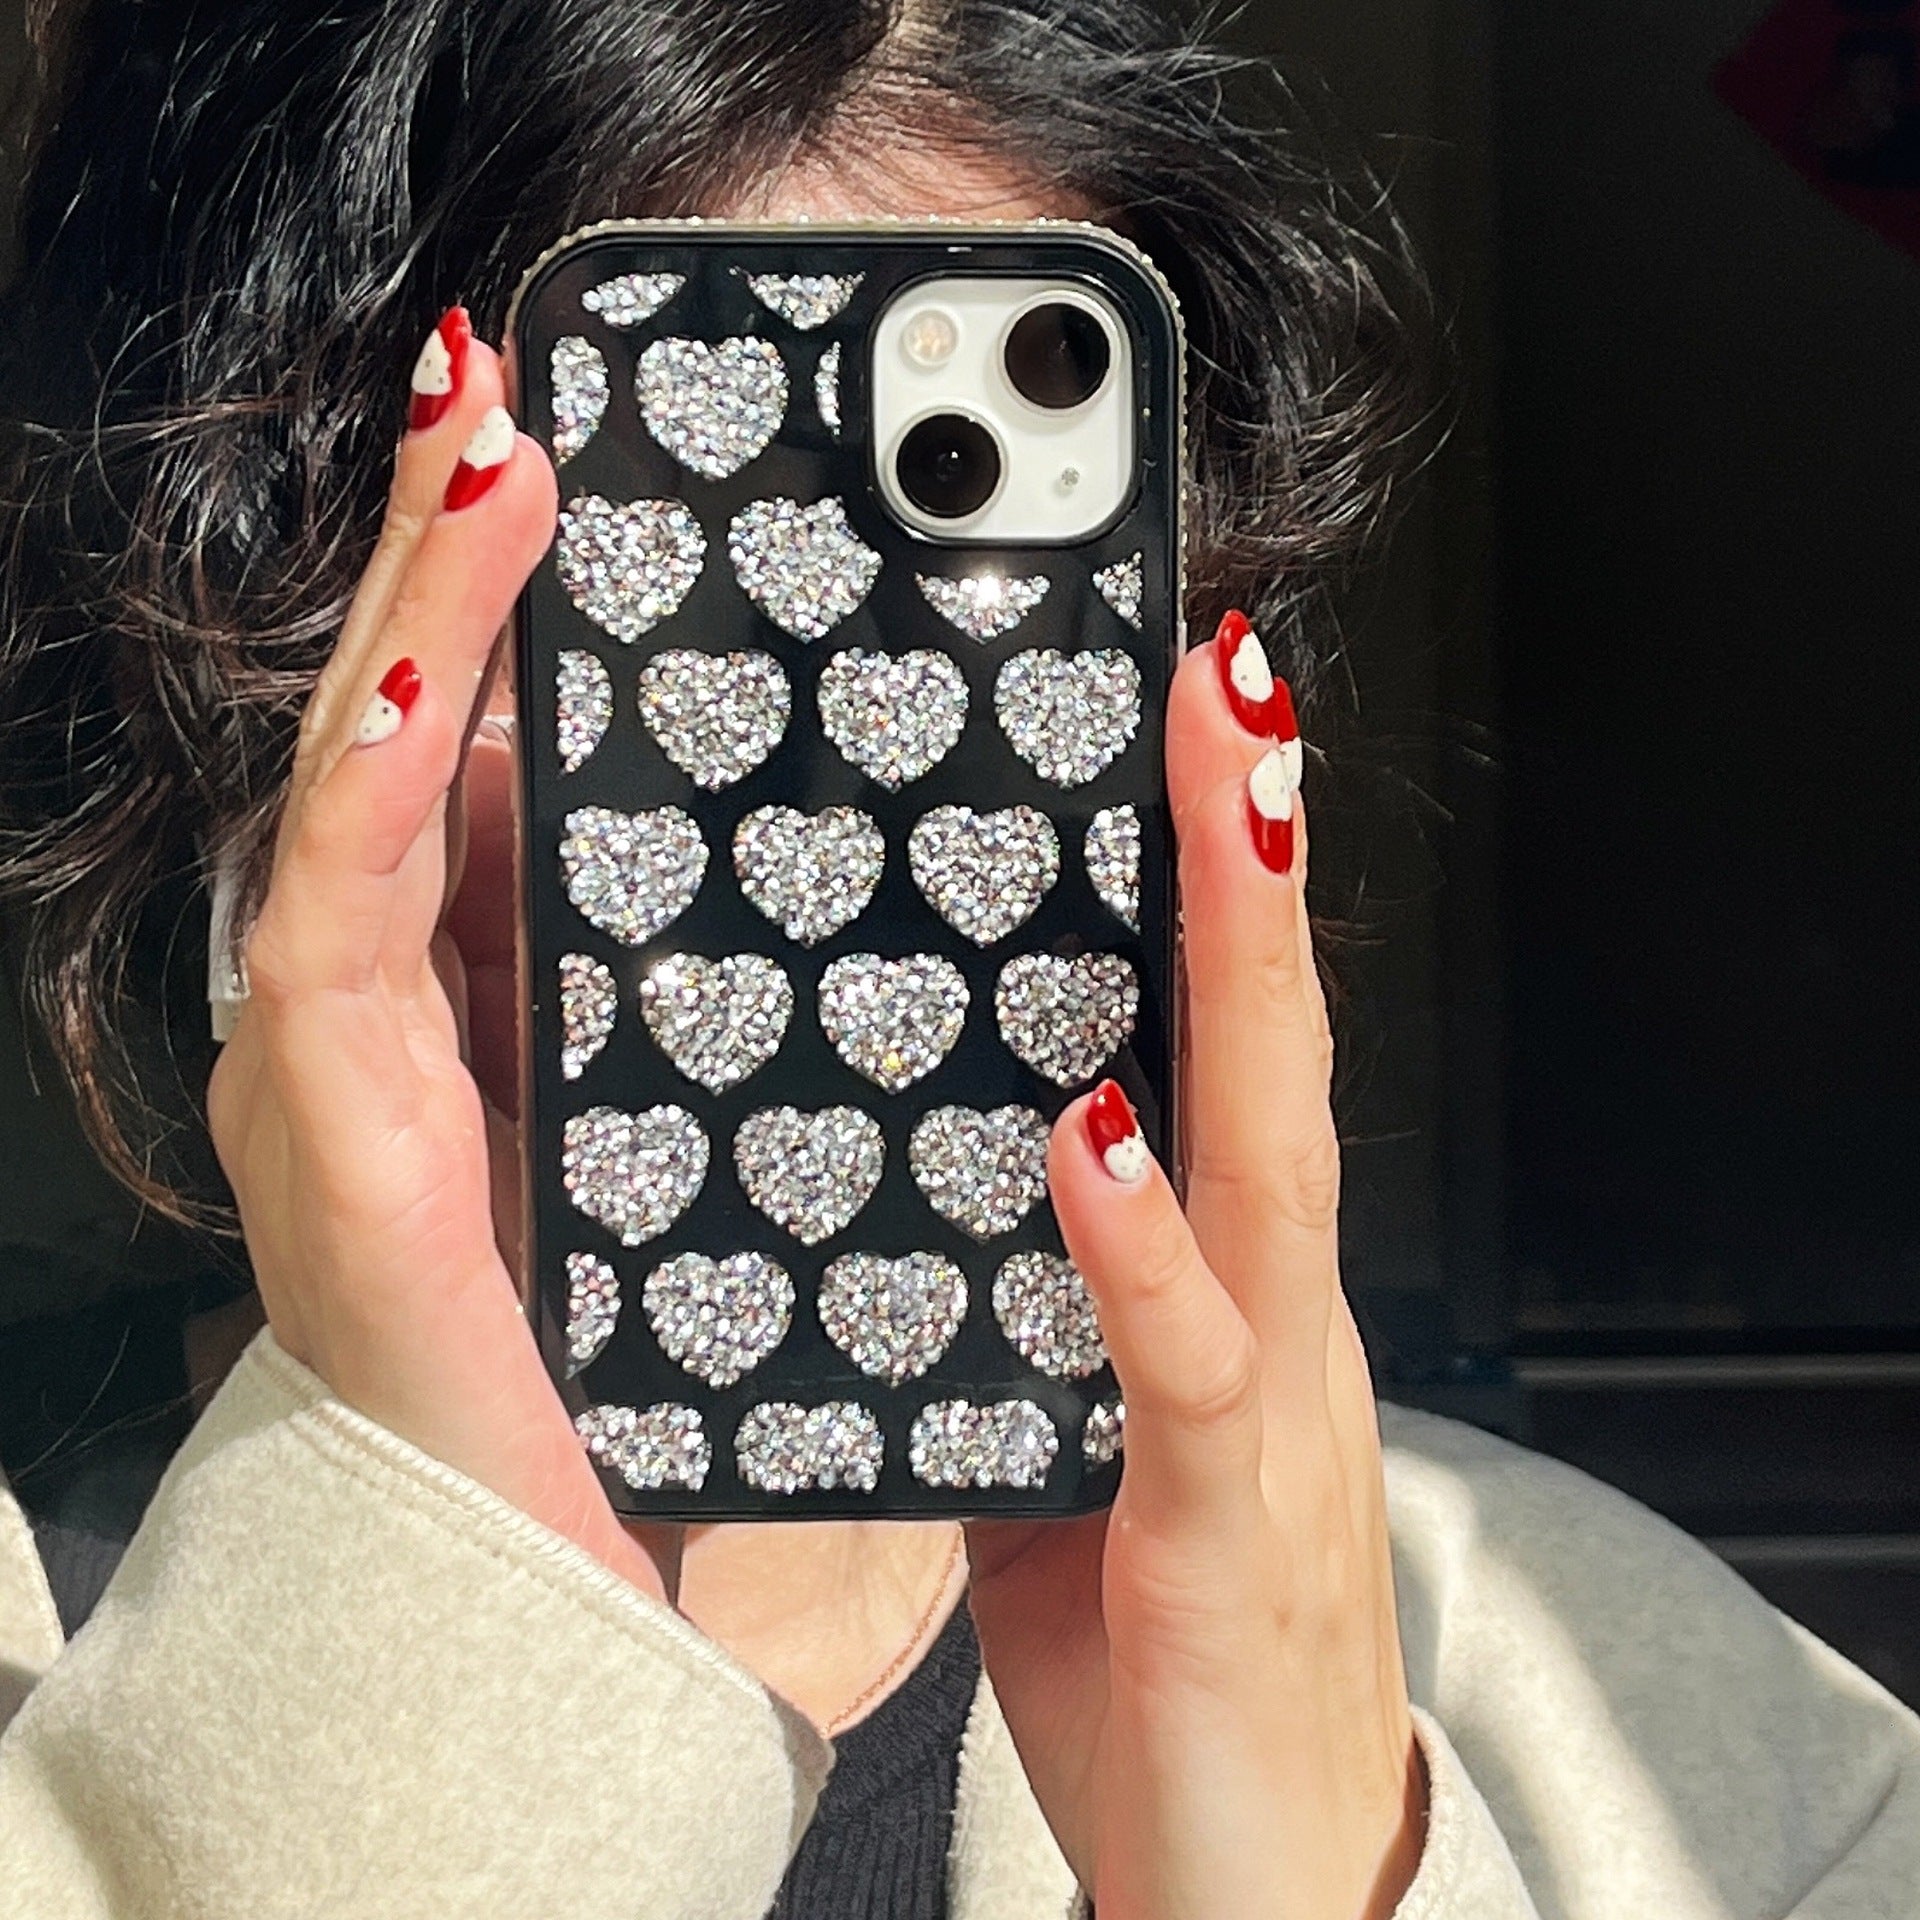 Full Screen Heart Diamond Case Cover For iPhone